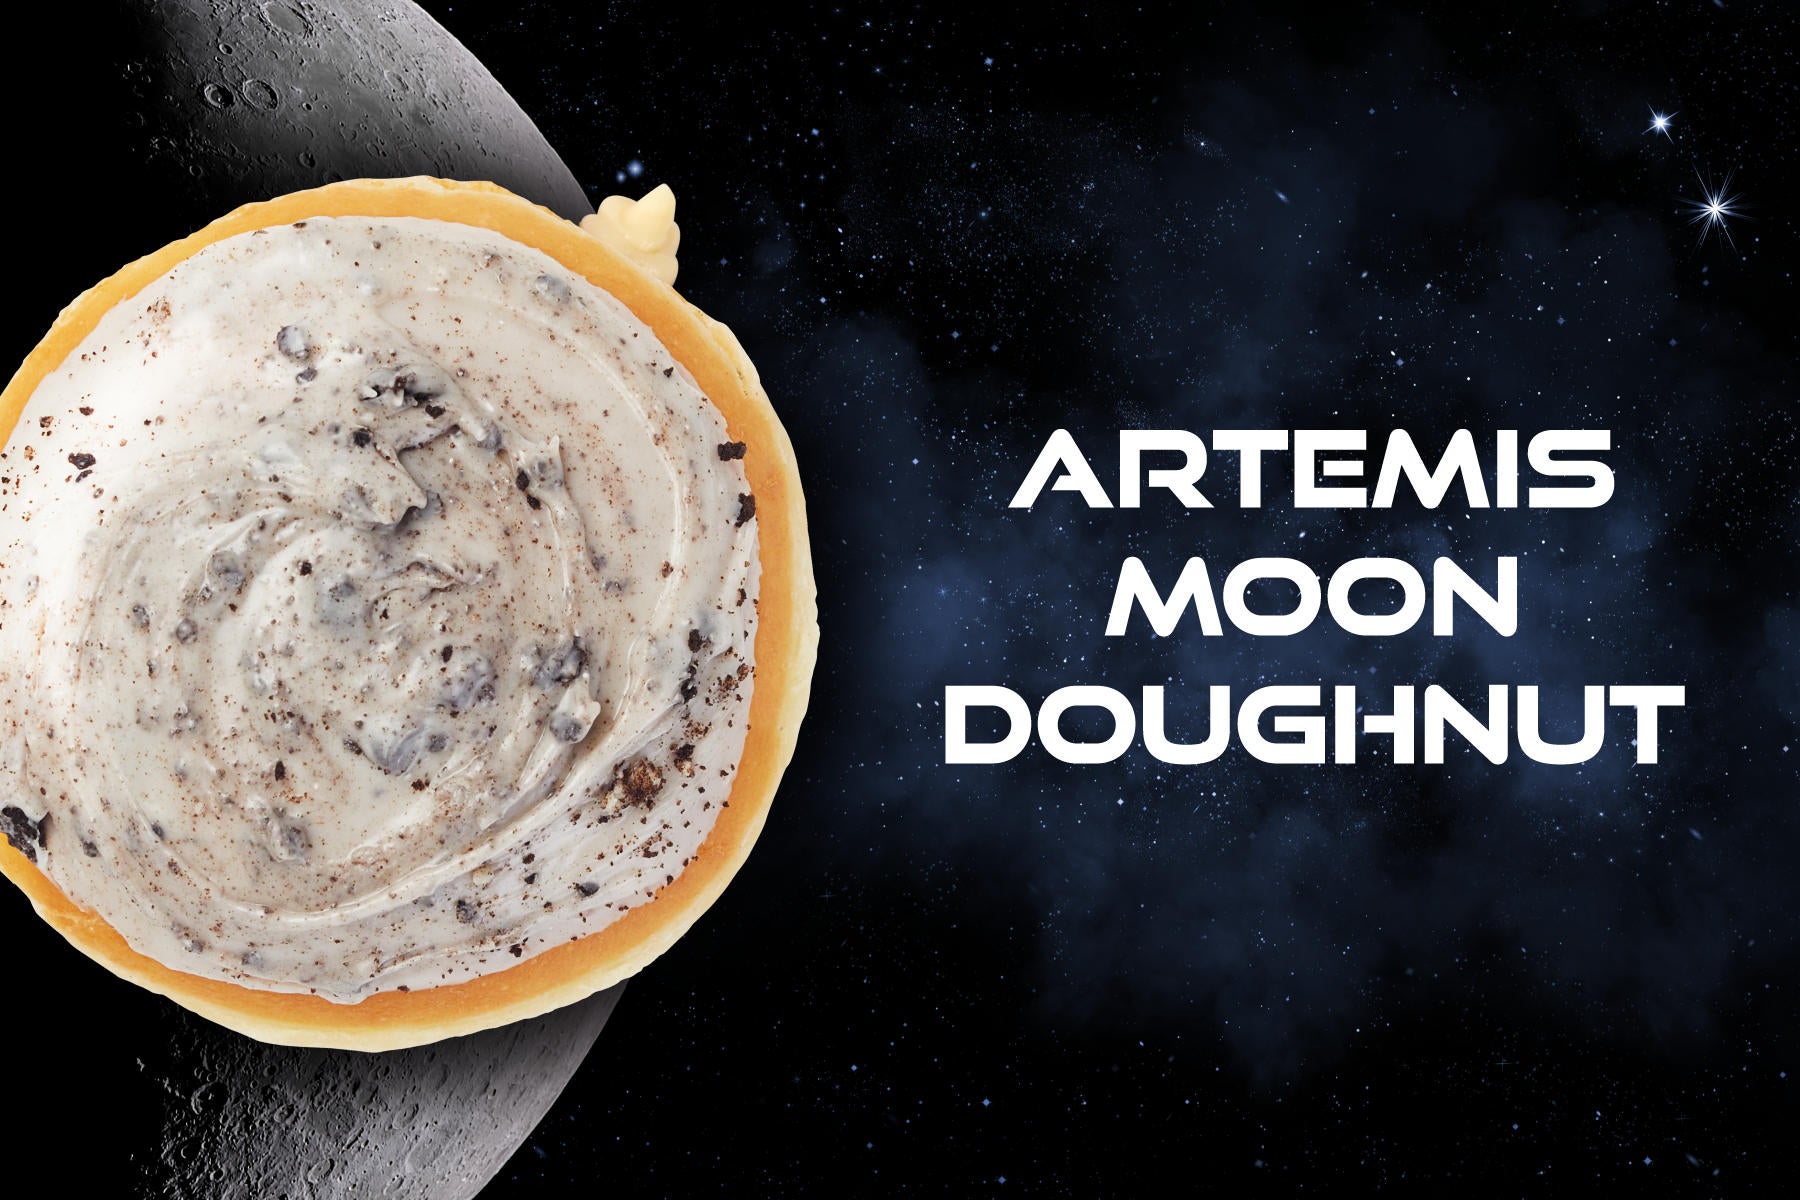 krispy-kreme-artemis-moon-doughnut.jpg